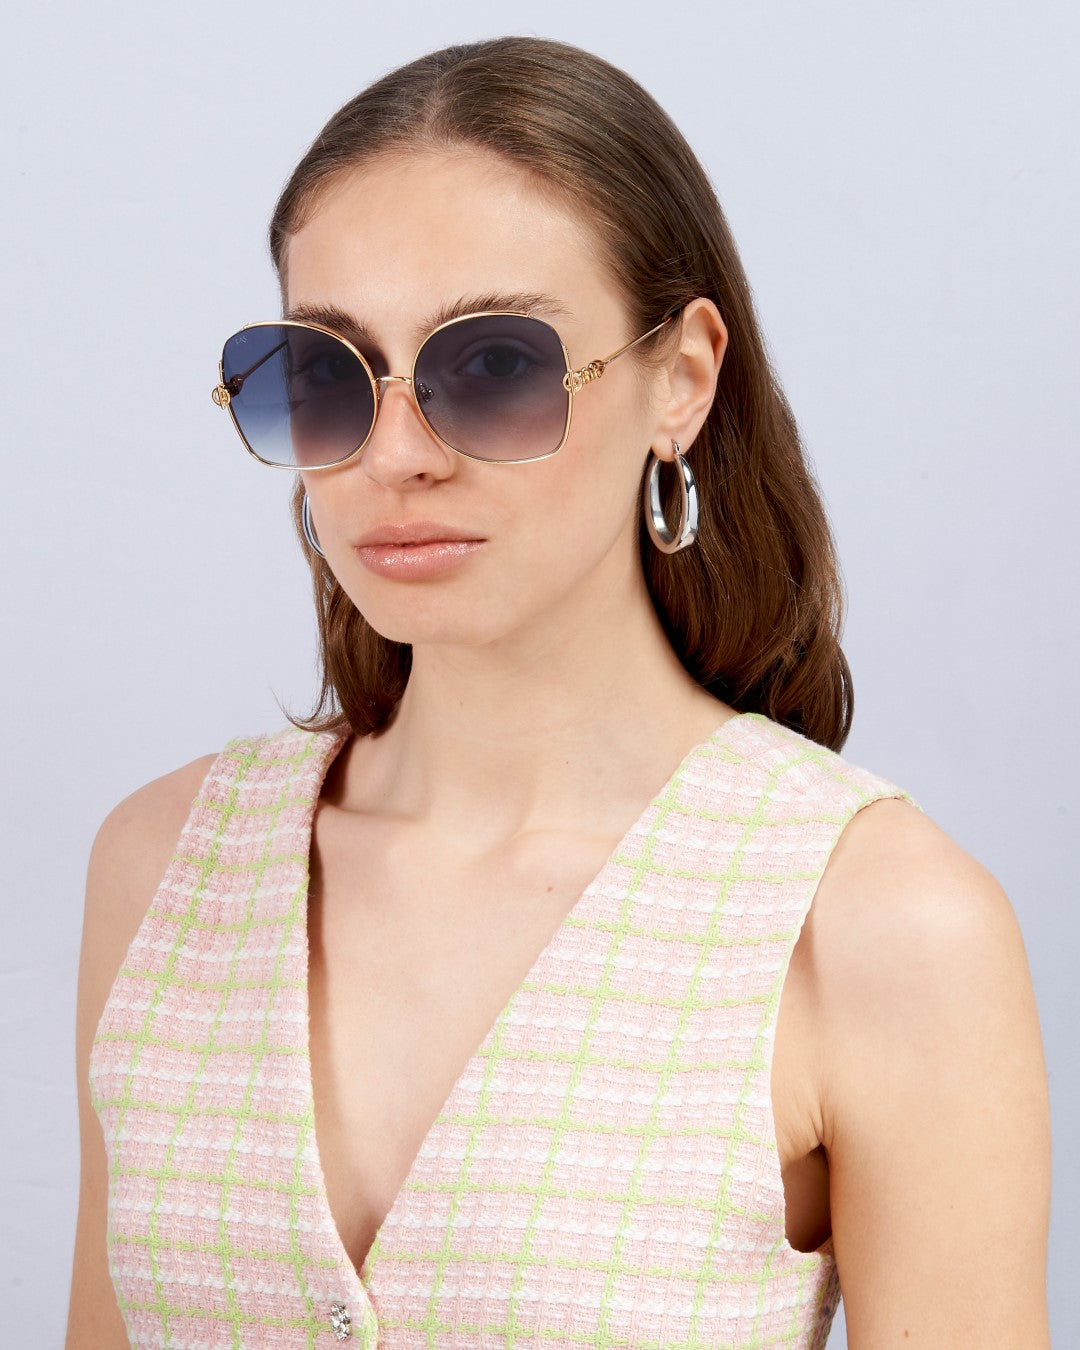 Details more than 178 chloe isidora sunglasses latest